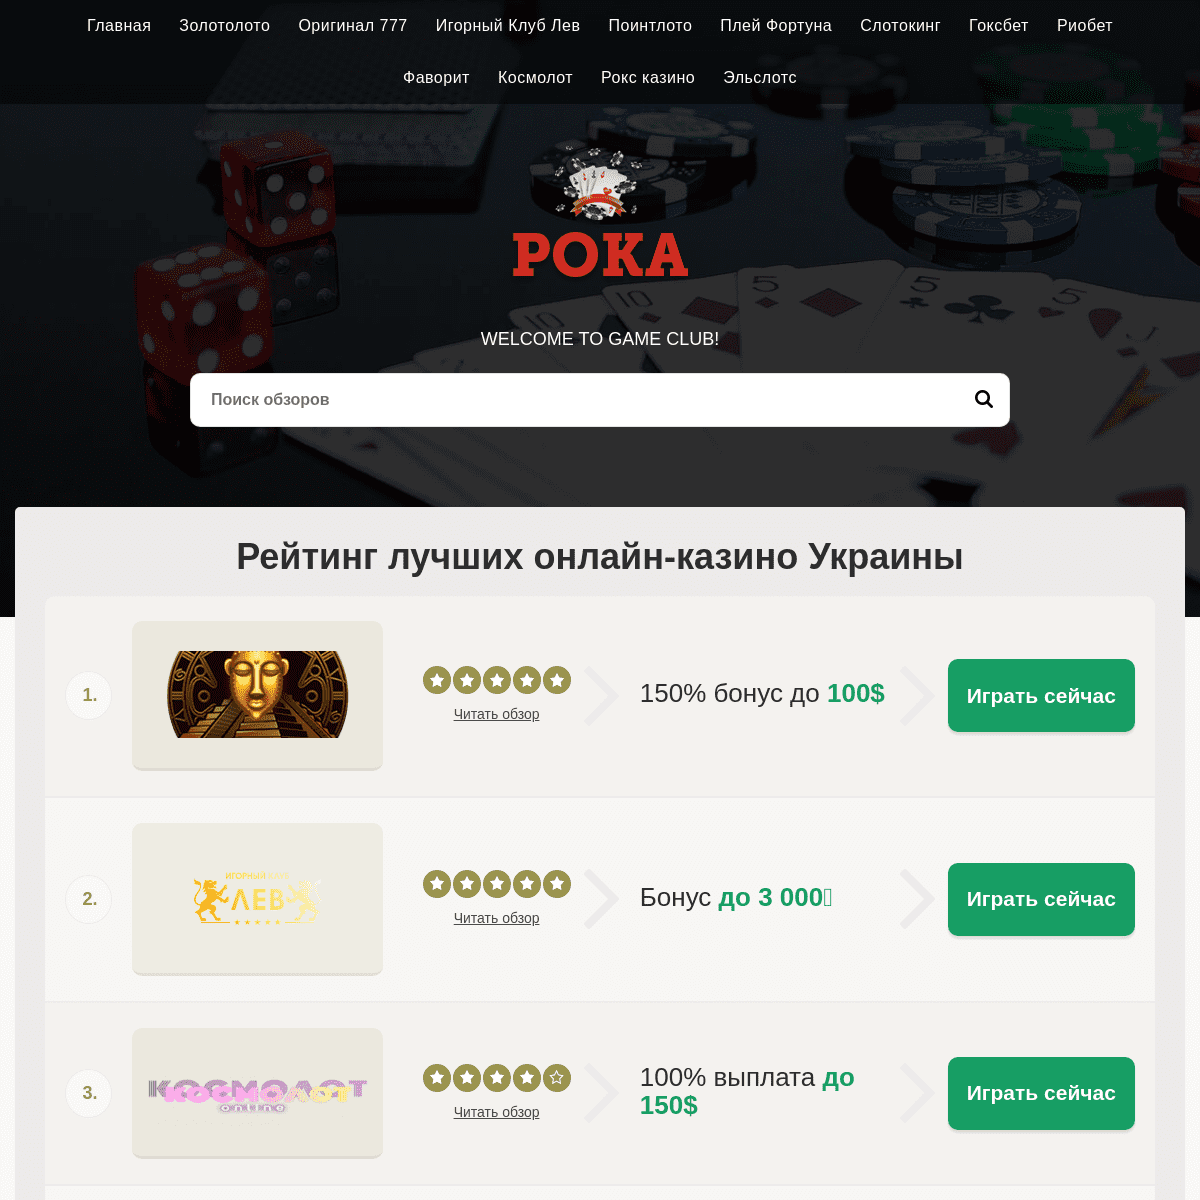 A complete backup of https://oribalke.com.ua